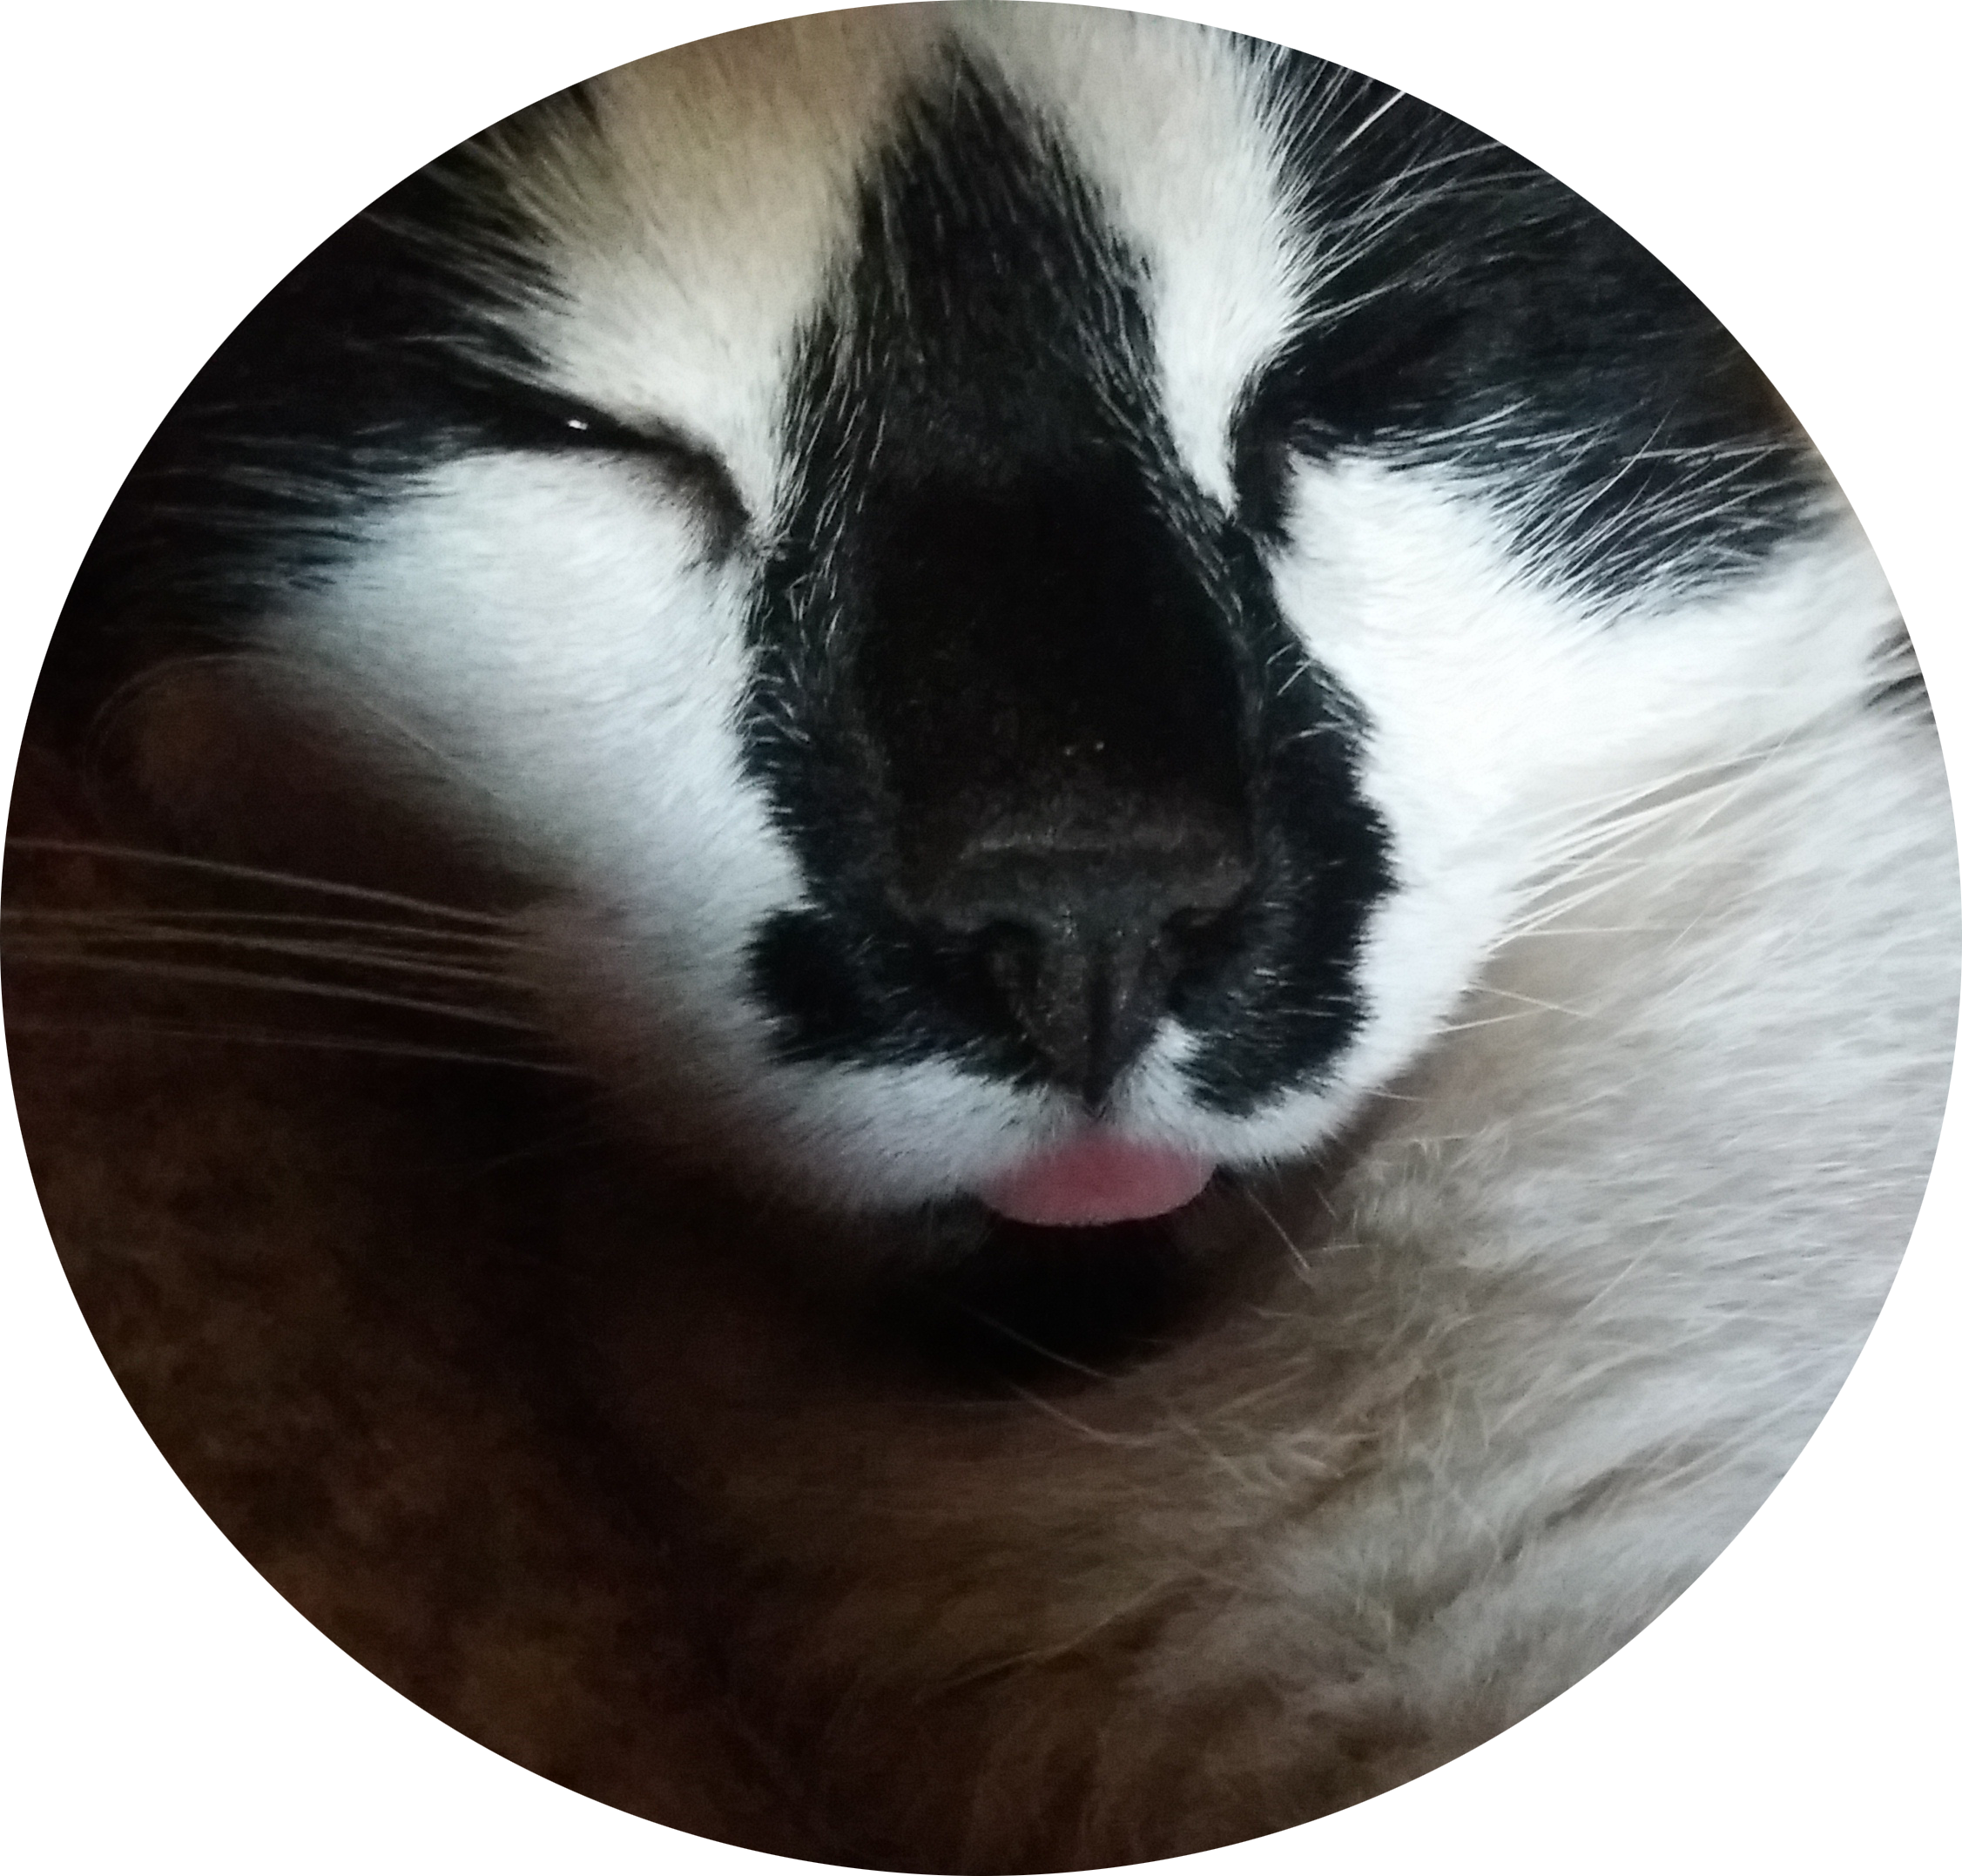 Profilfoto-Billy-the-Cat